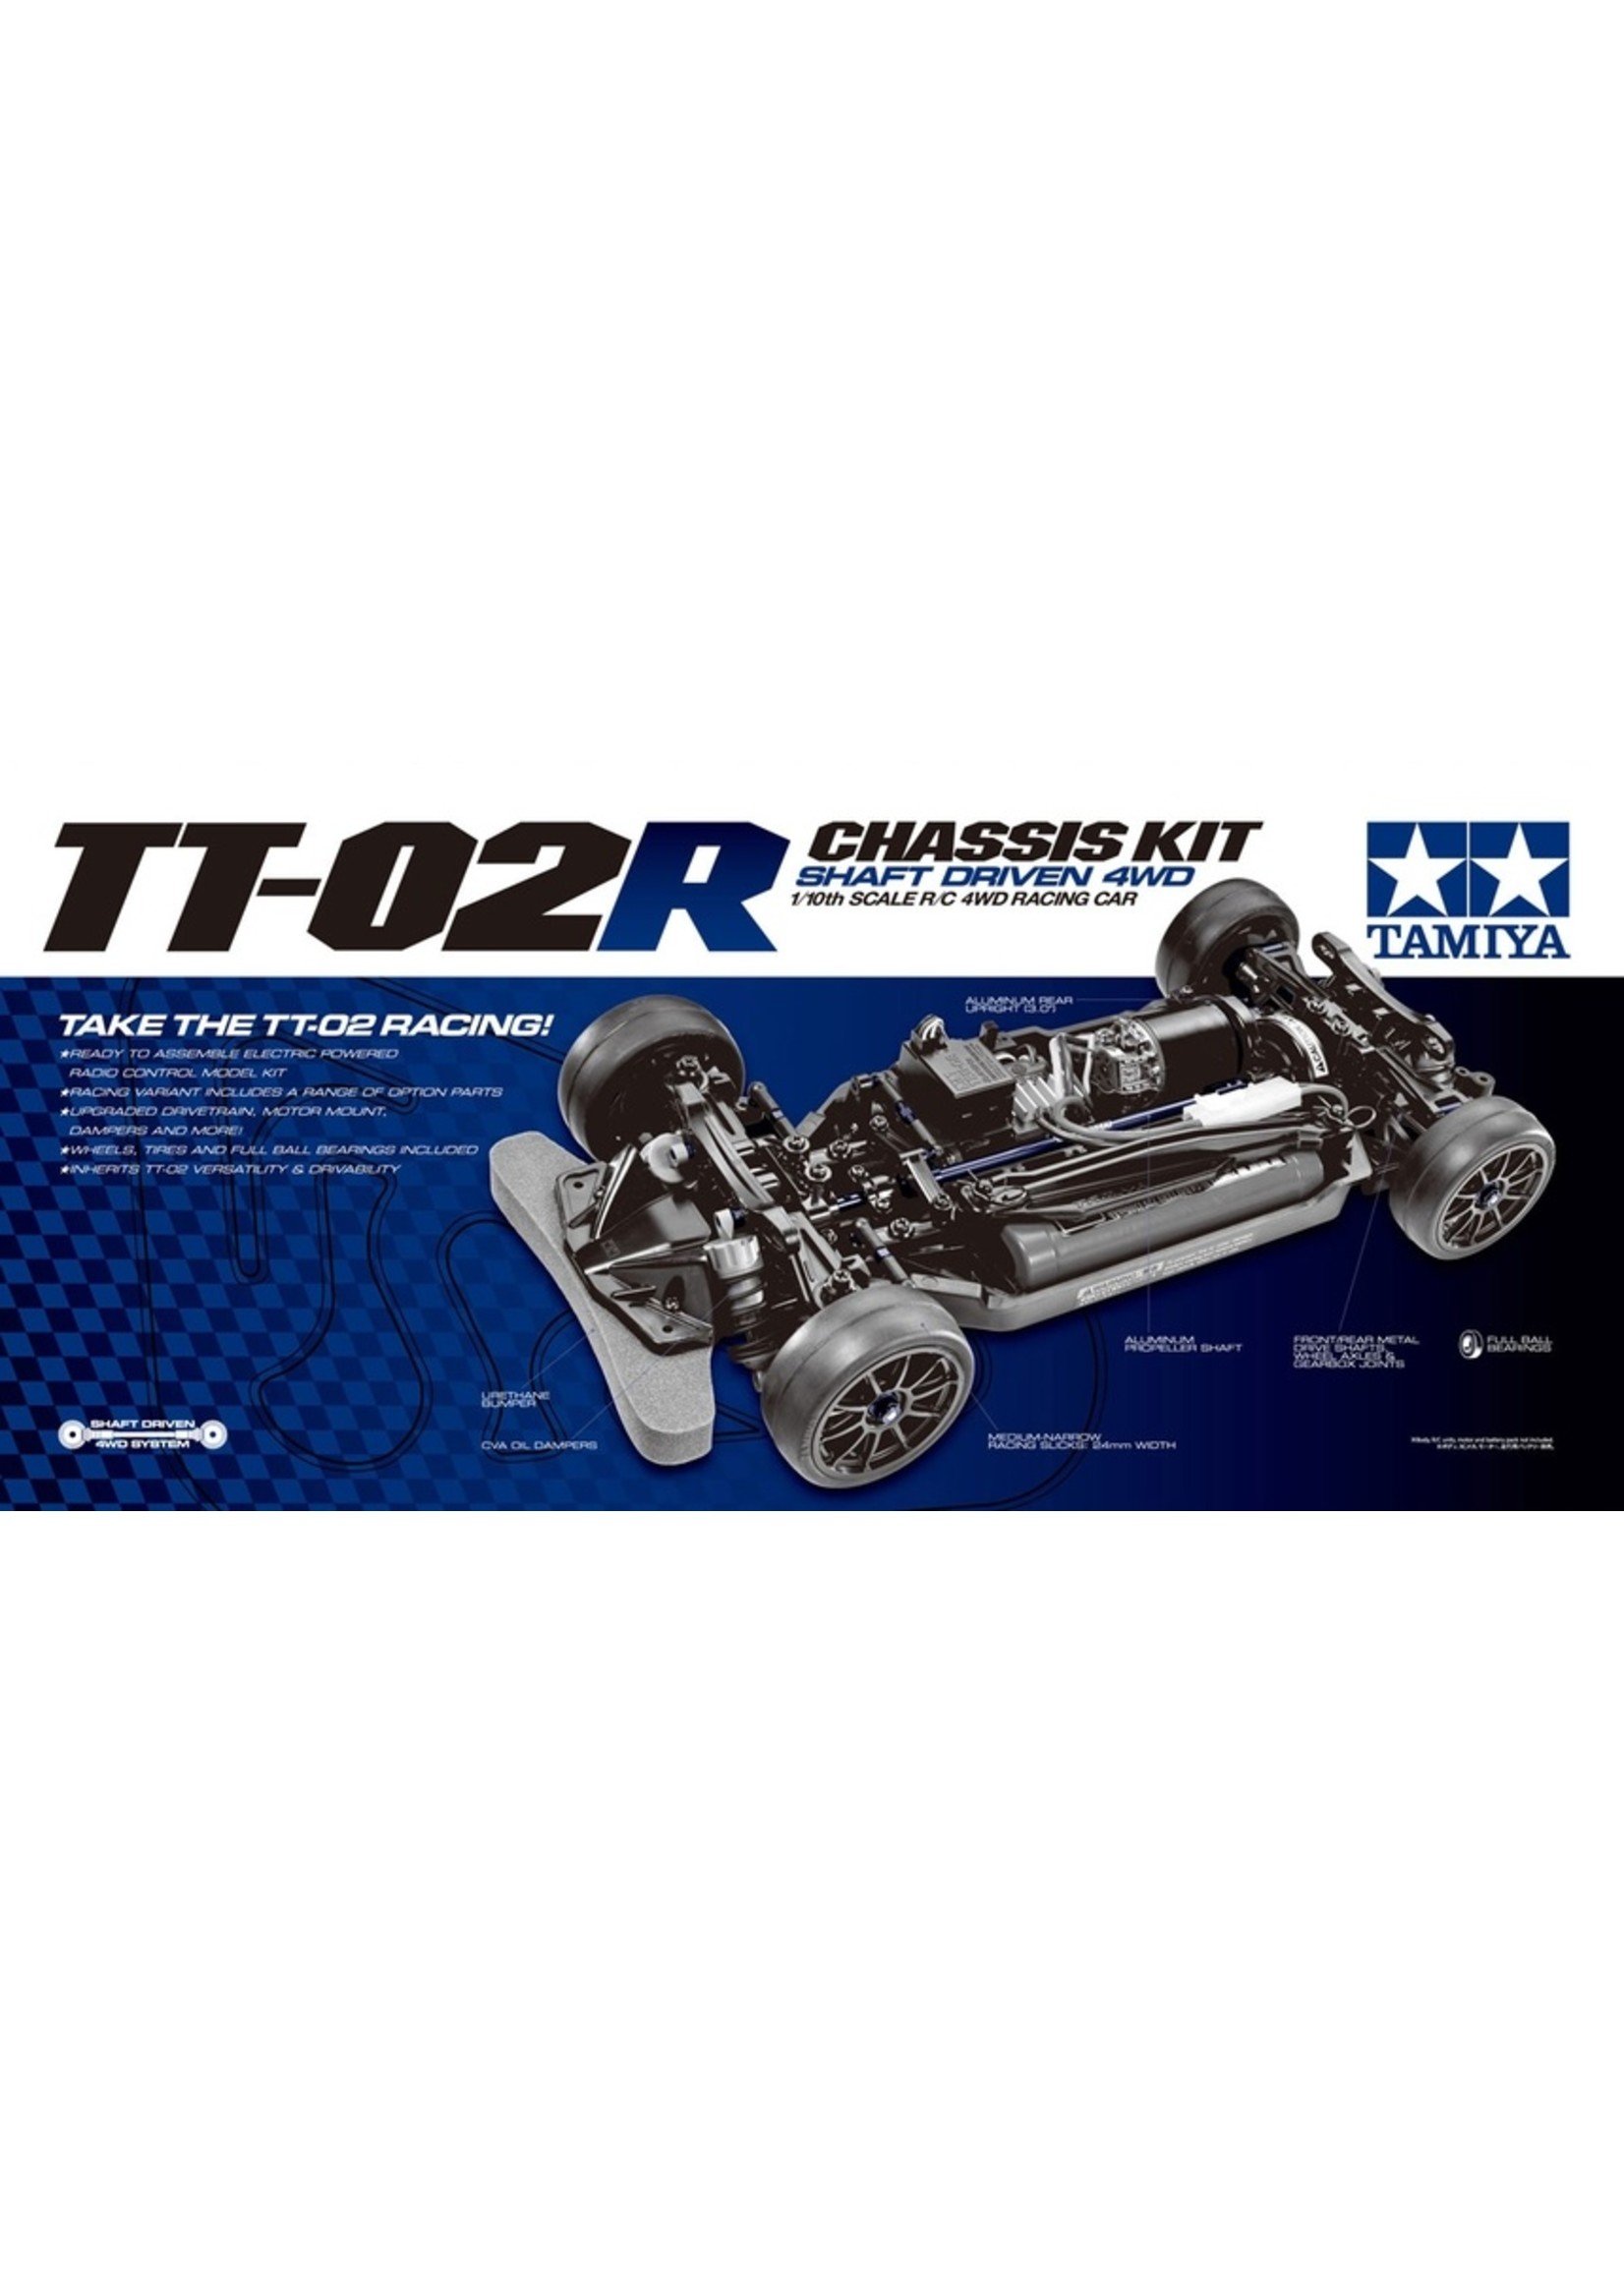 Tamiya 1/10 TT-02R Chassis 4WD Kit